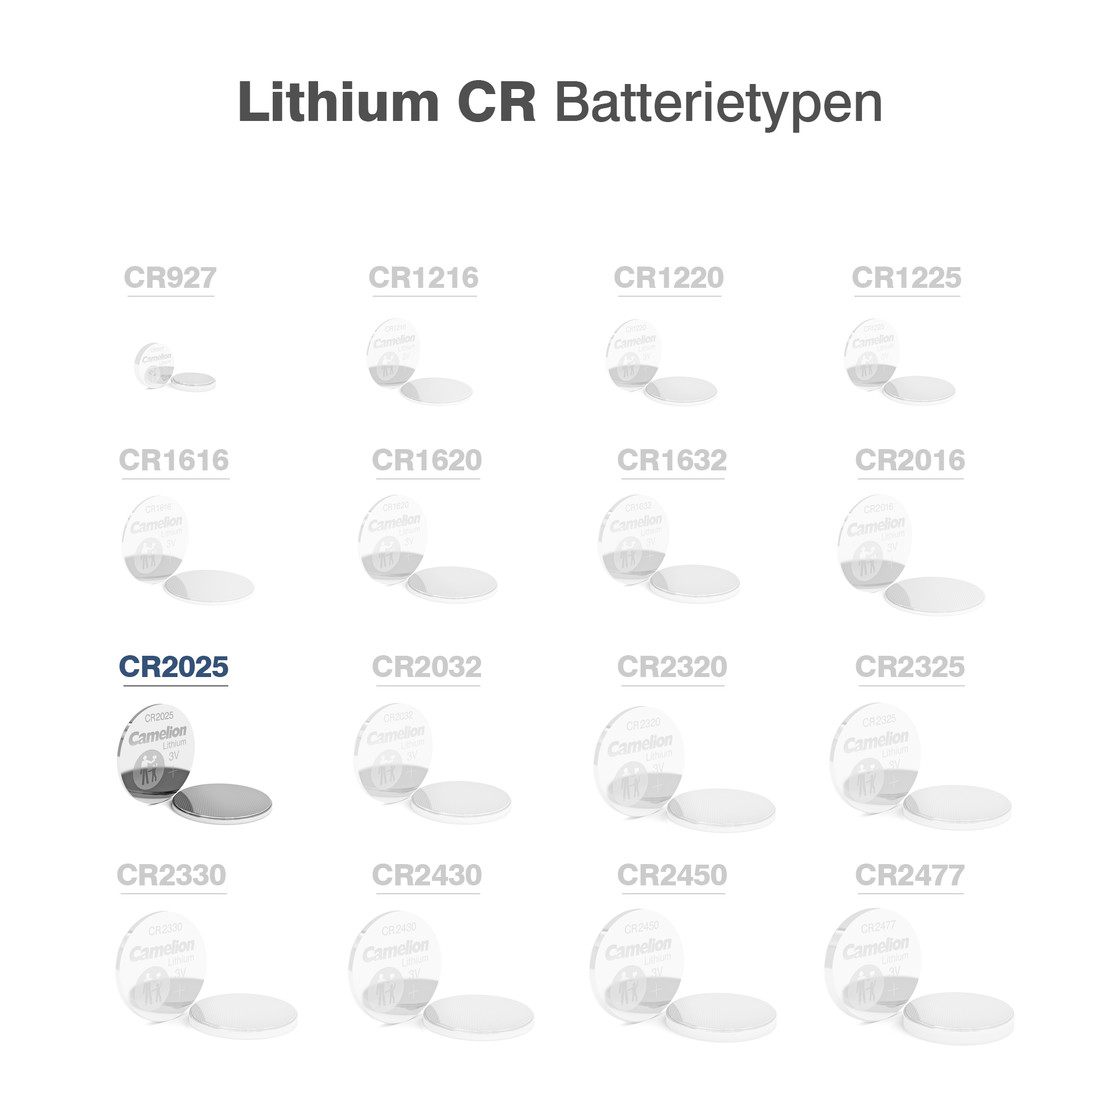 Camelion Lithium CR2025 Knopfzelle CR 2025 Batterien 5er Pack